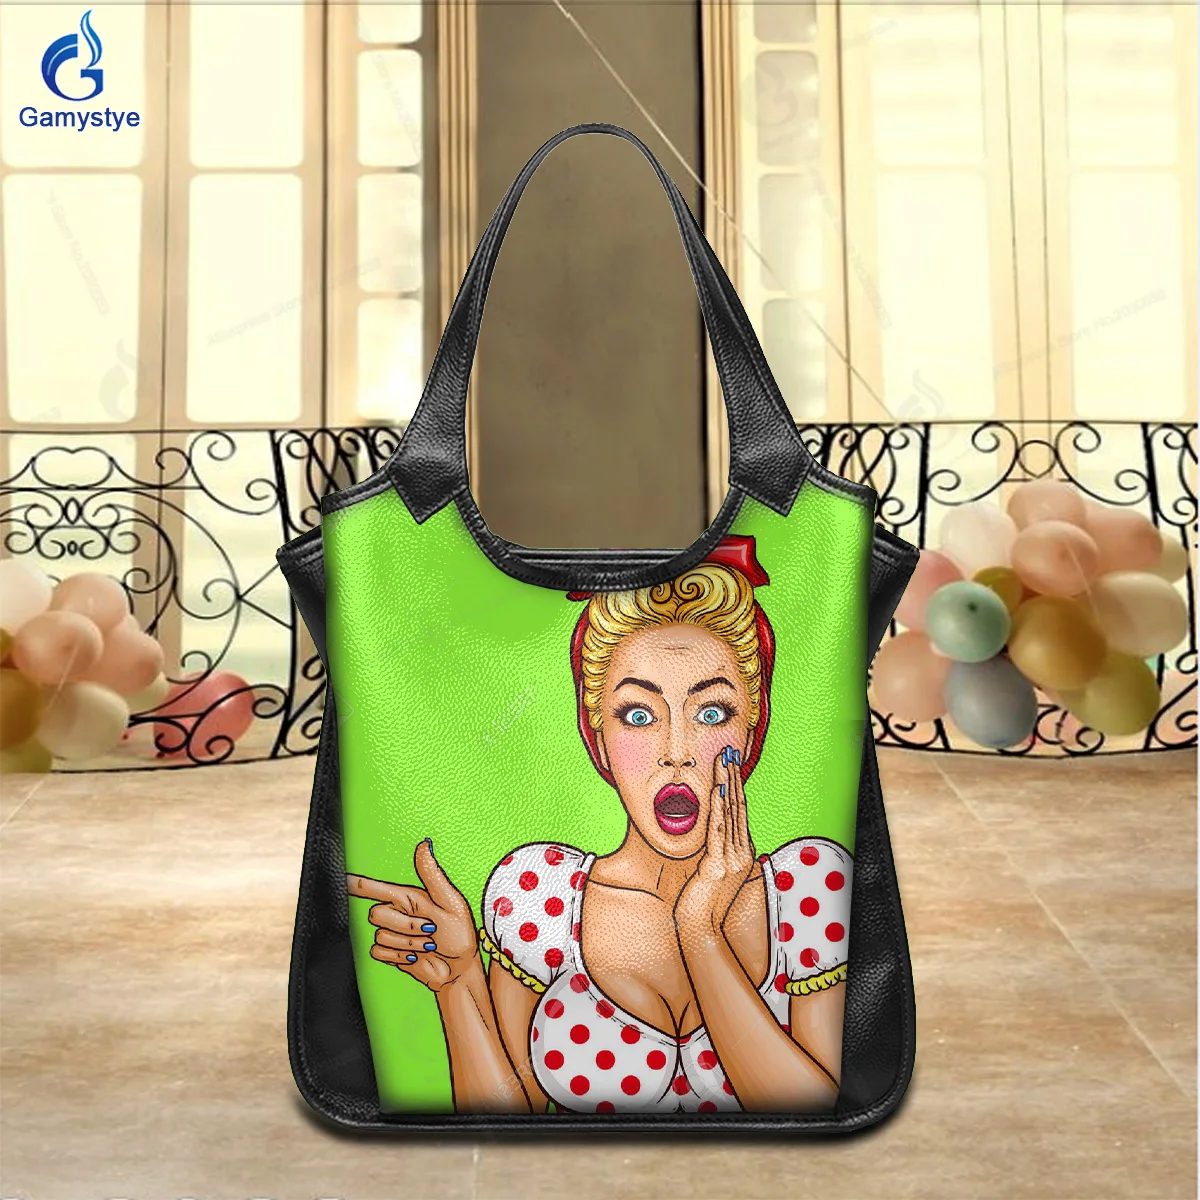 

2023 Gamystye Artisc Hand Draw POP Girl Bags Ladies Popular Genuine Leather Tote Handbags Messenger Shoulder Bag For women Gifts